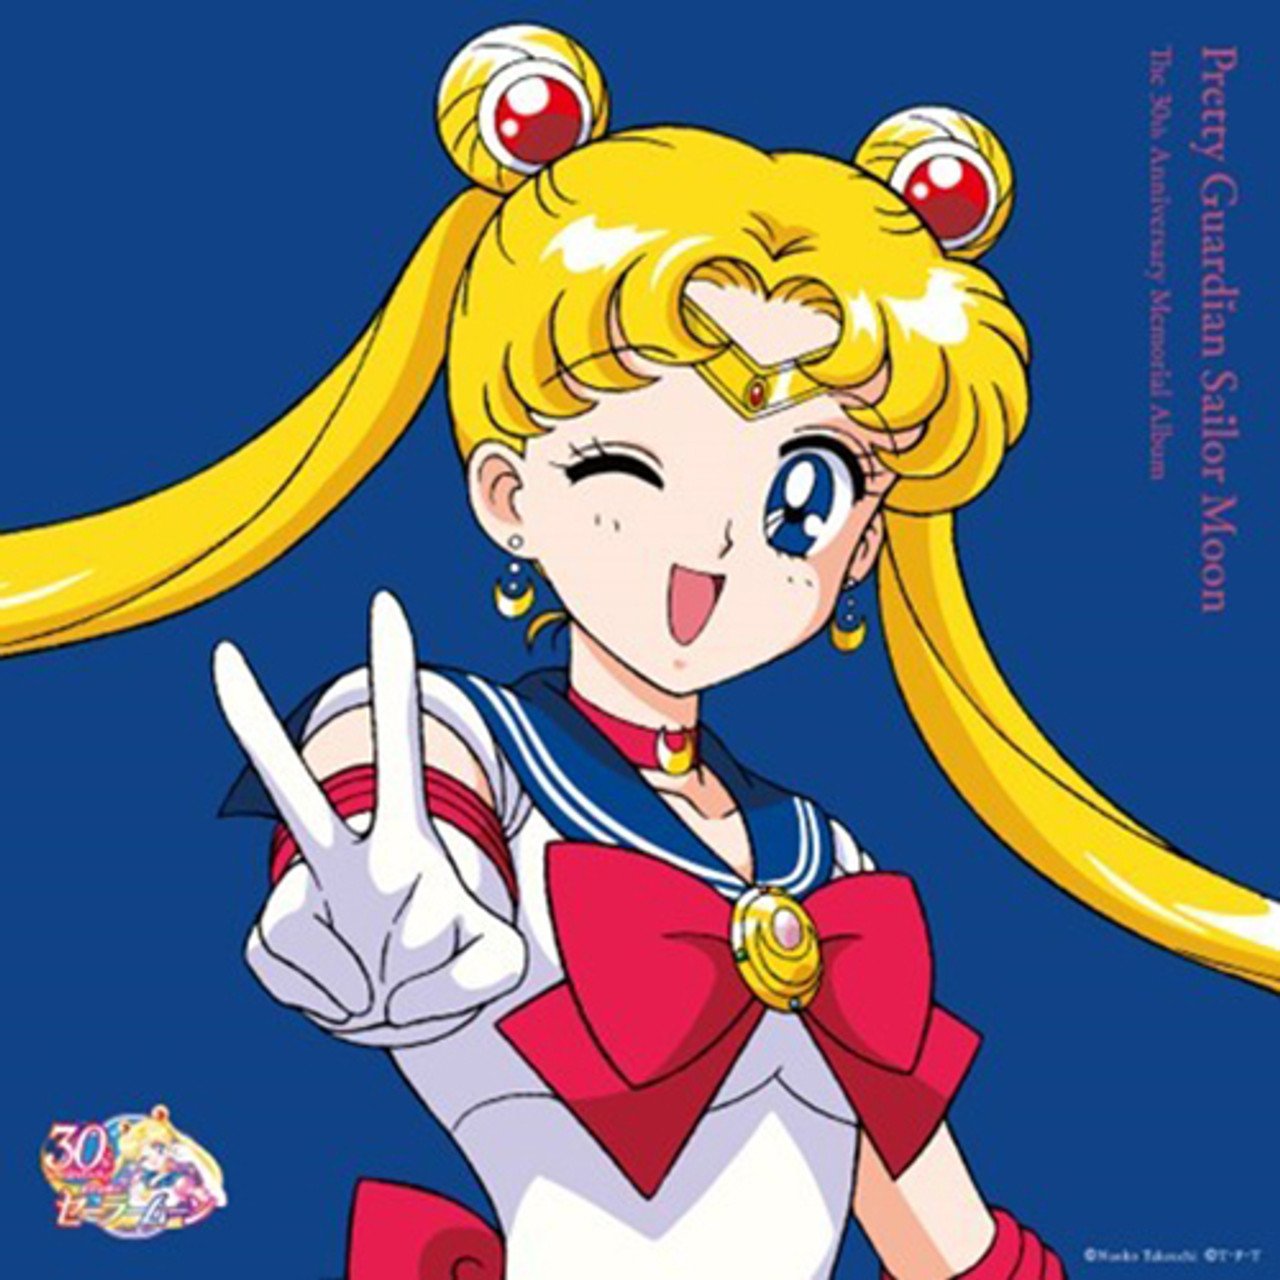 |v/a| "Pretty Guardian Sailor Moon: The 30th Anniversary Memorial Album" [Pink Vinyl] 2LP